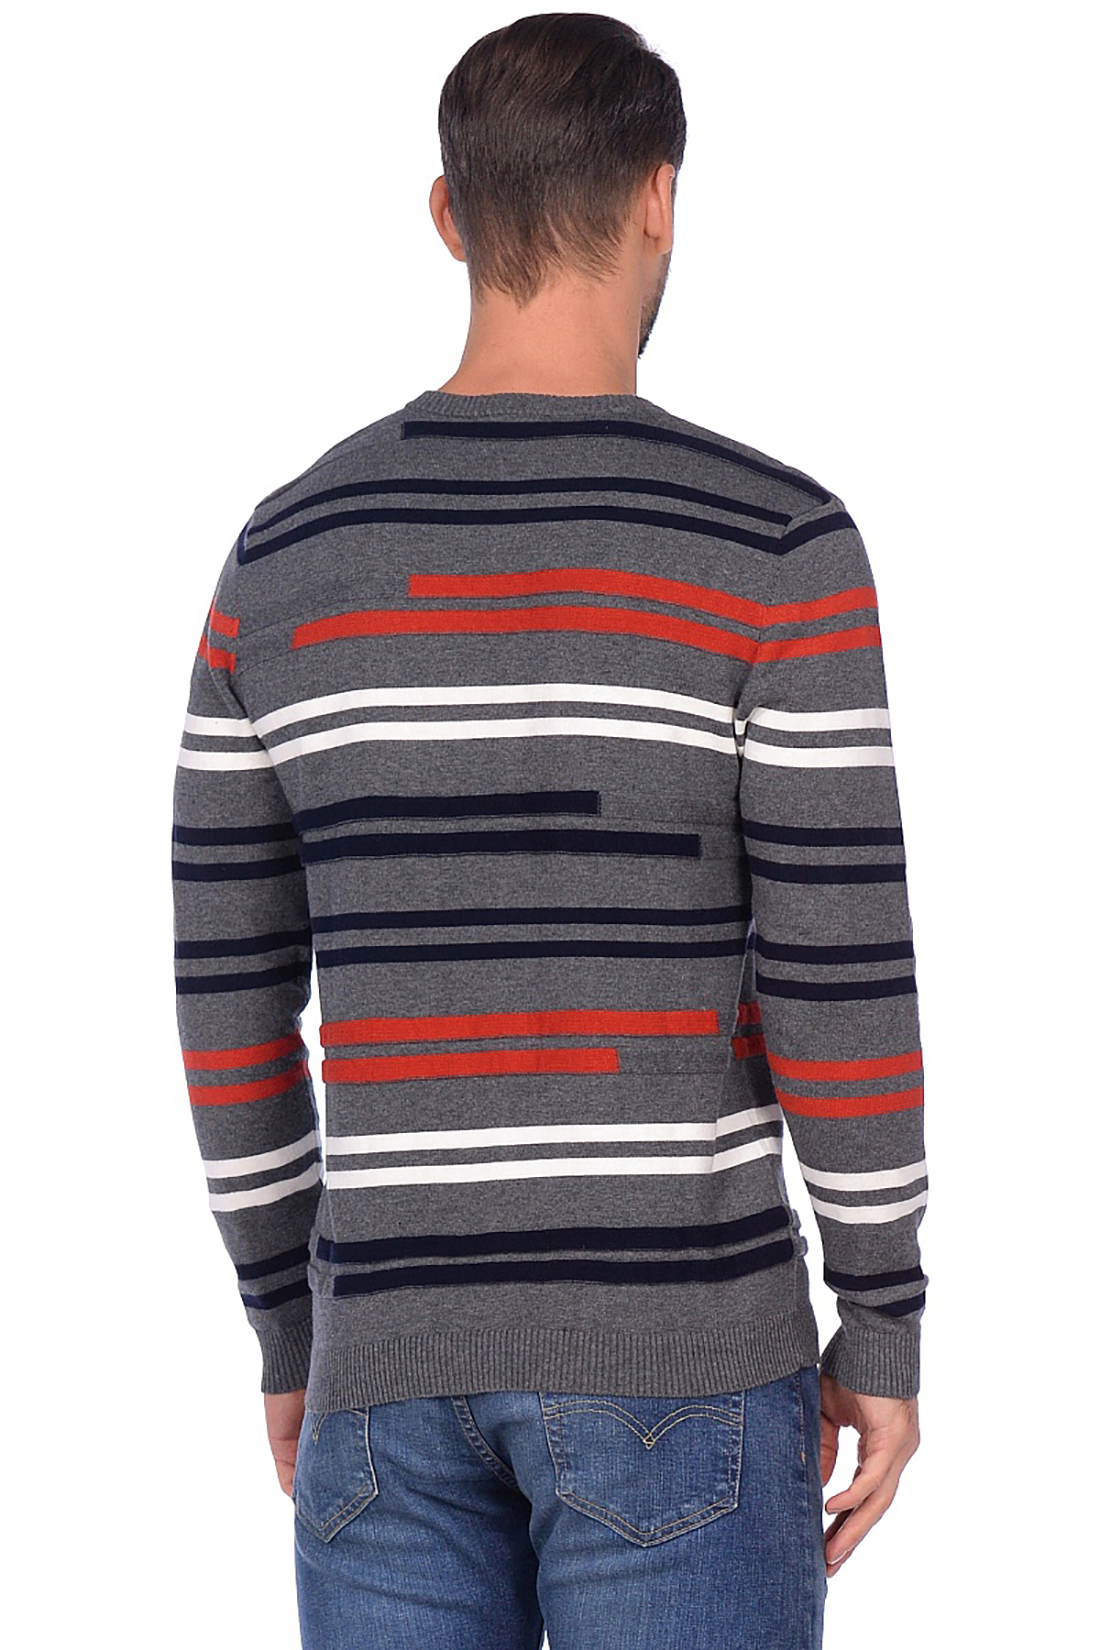 Пуловер с контрастными полосками (арт. baon B639530), размер XXL, цвет серый Пуловер с контрастными полосками (арт. baon B639530) - фото 2